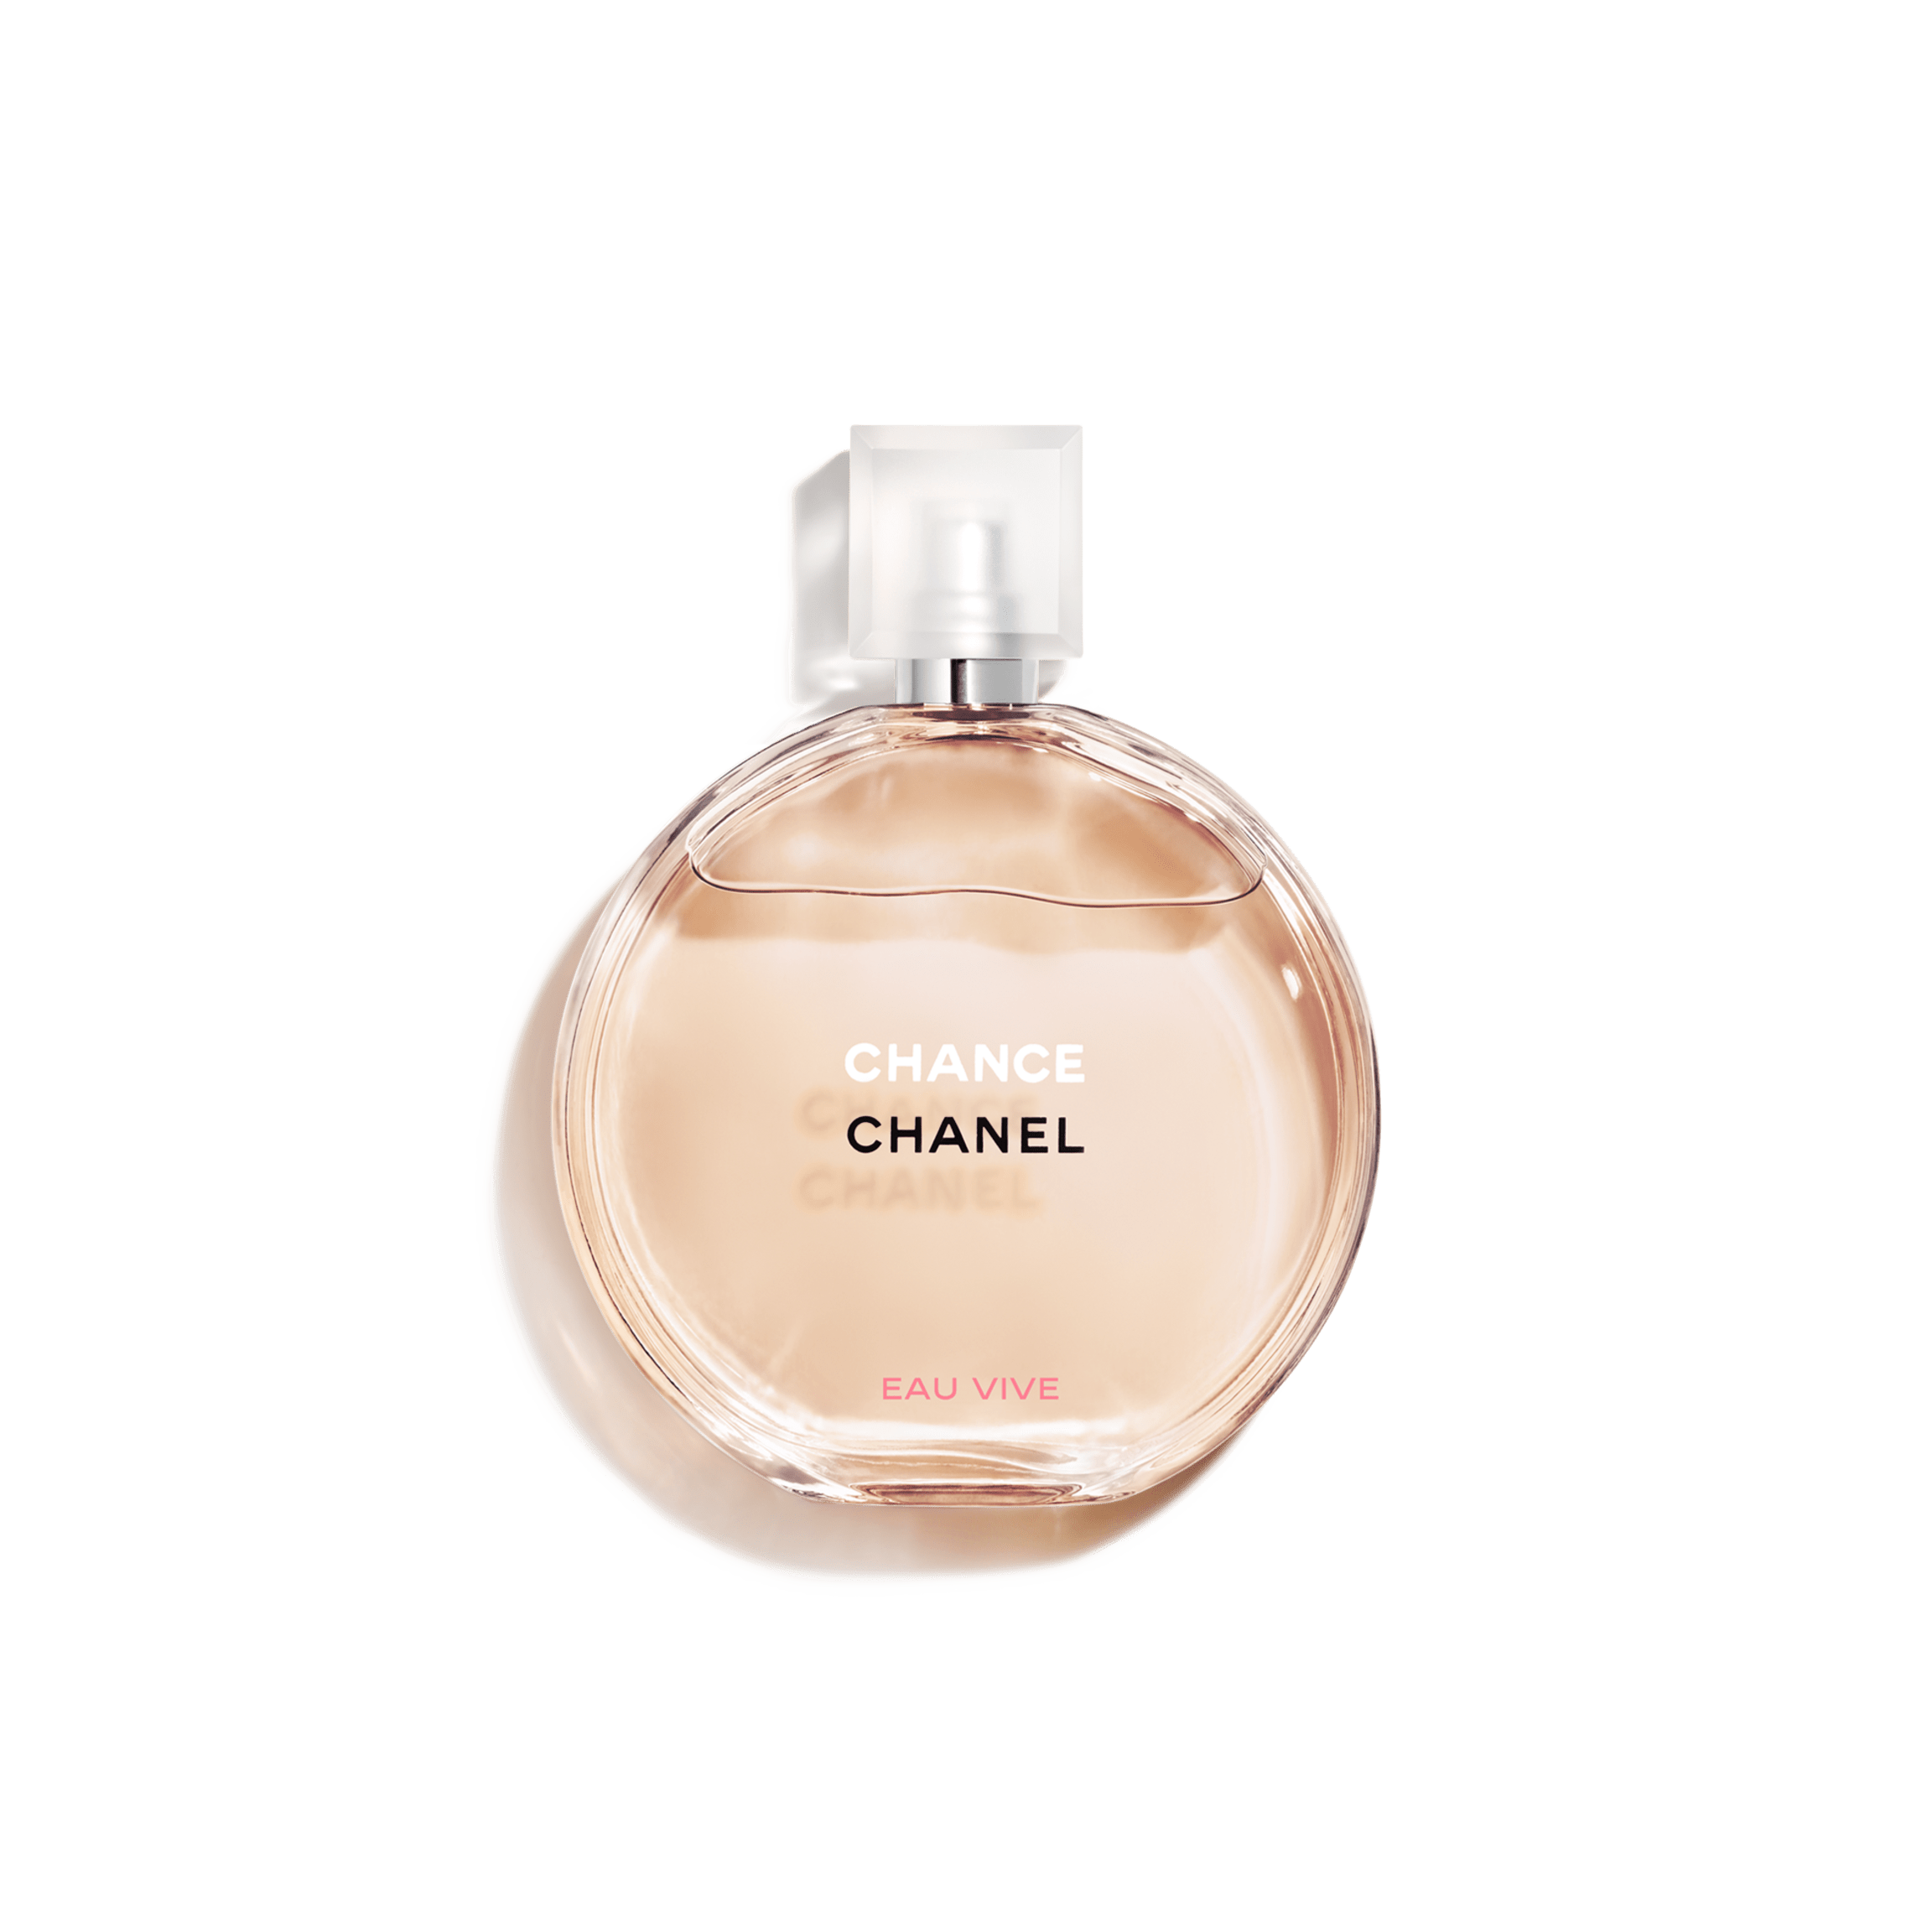 Chanel Chance Eau Fraiche Fragrance Review 2023